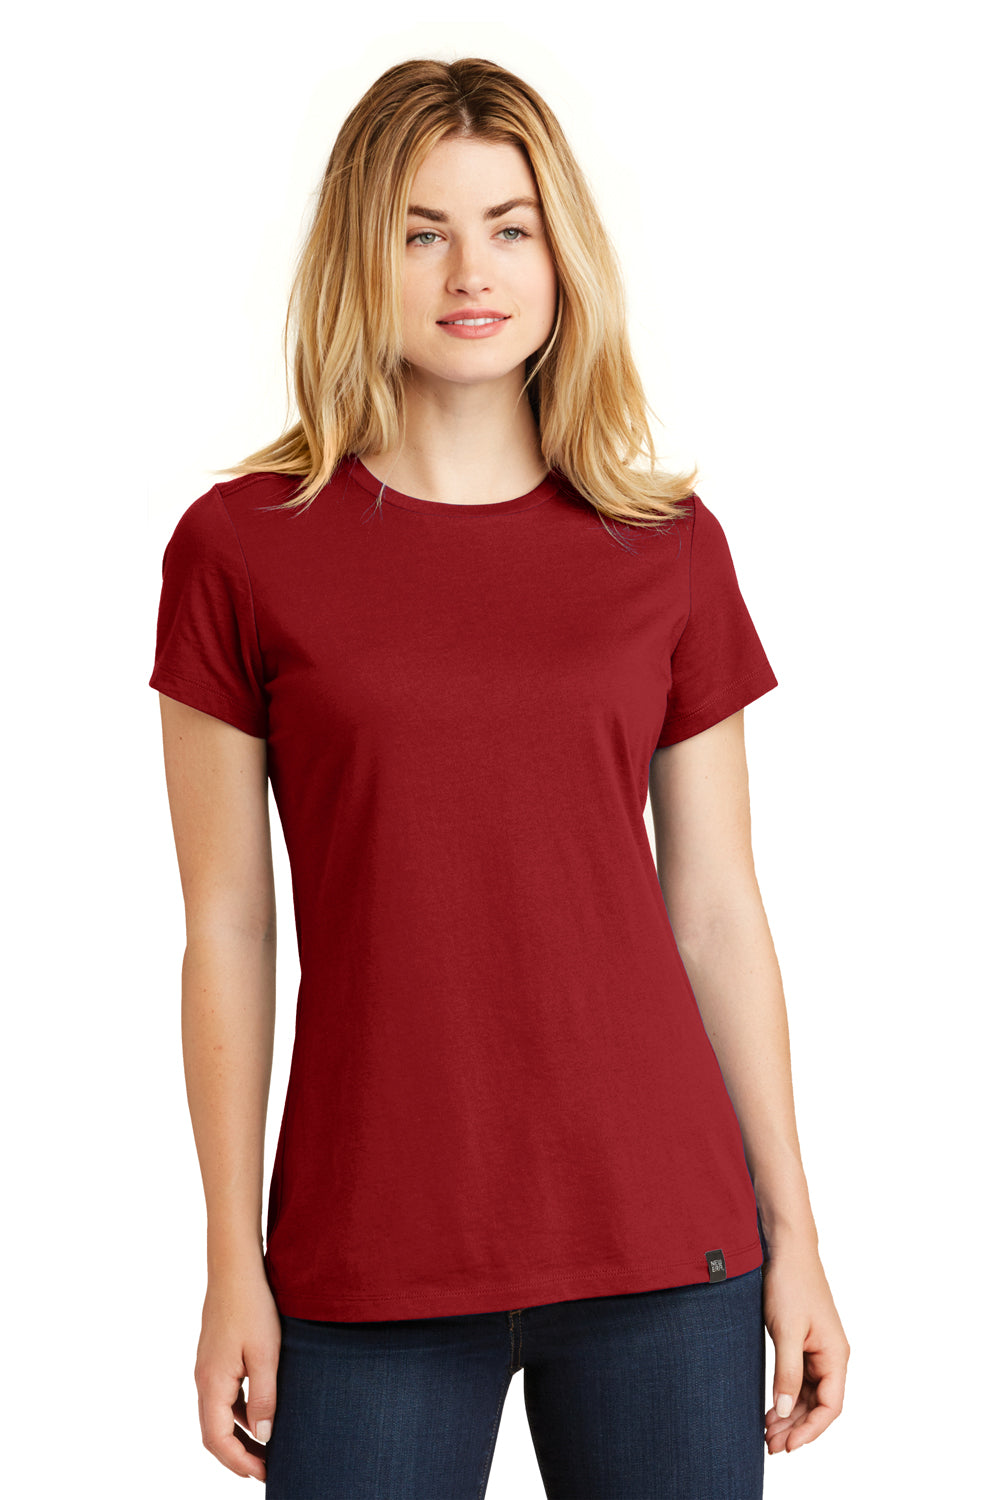 New Era LNEA100 Womens Heritage Short Sleeve Crewneck T-Shirt Crimson Red Front